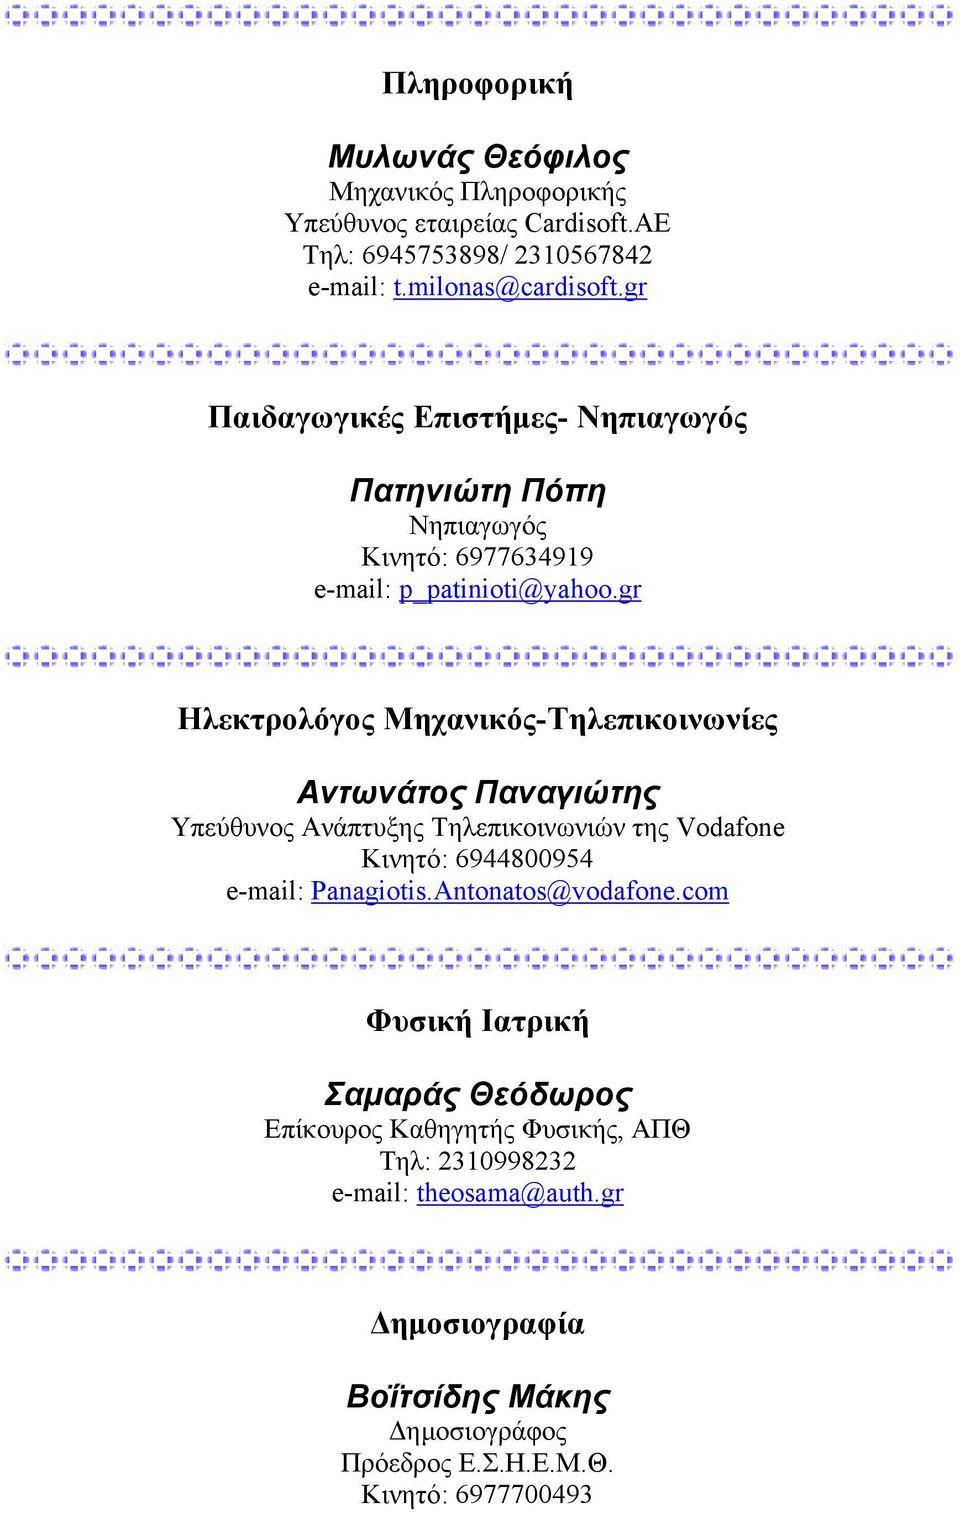 gr Ηλεκτρολόγος Μηχανικός-Τηλεπικοινωνίες Αντωνάτος Παναγιώτης Υπεύθυνος Ανάπτυξης Τηλεπικοινωνιών της Vodafone Κινητό: 6944800954 e-mail: Panagiotis.